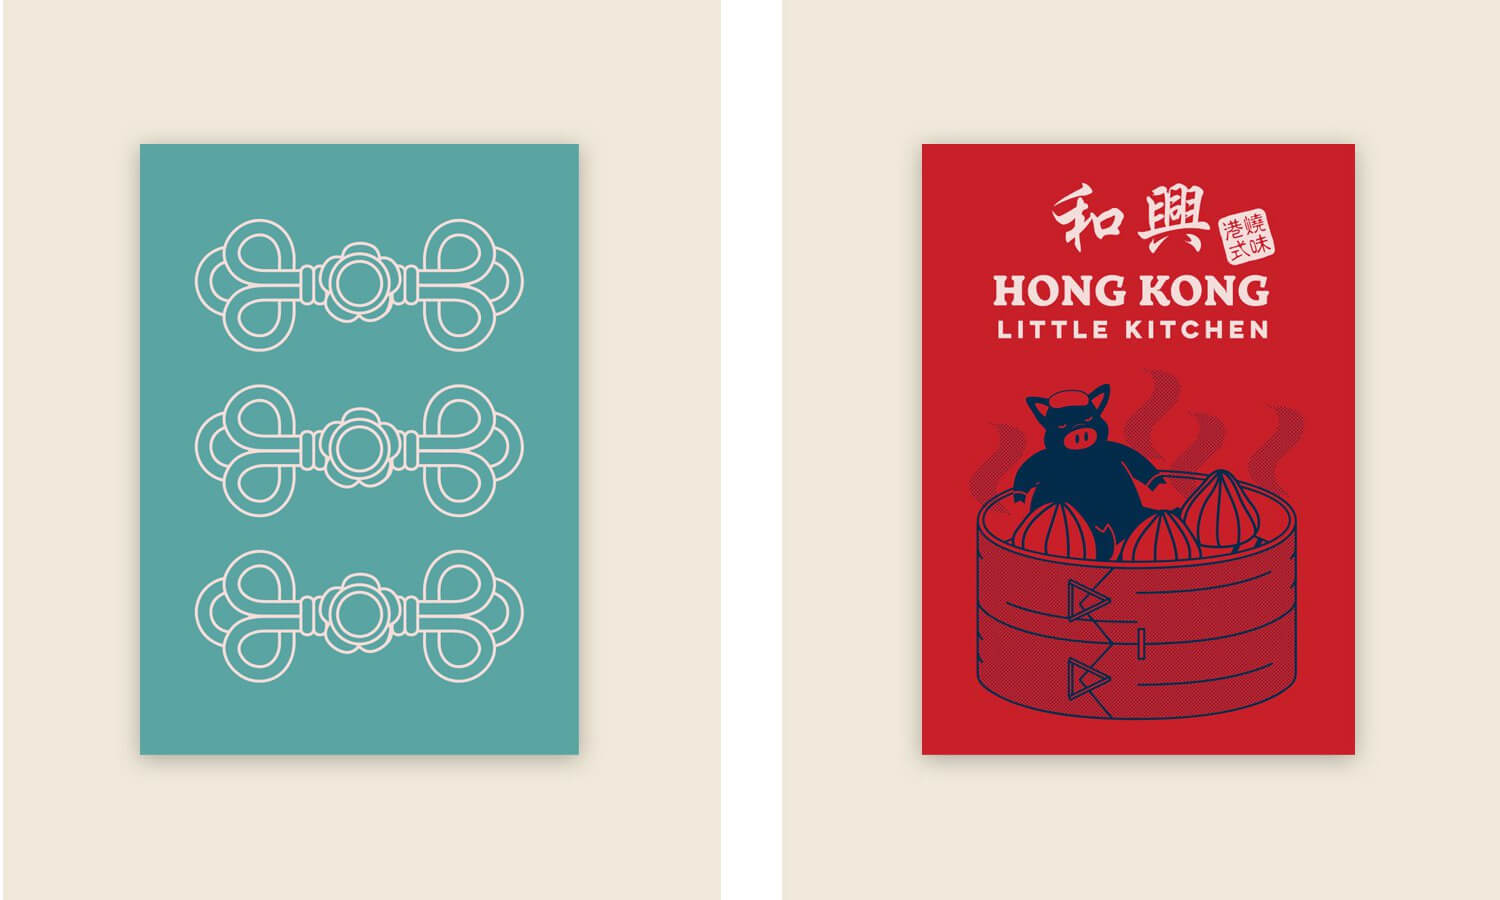 Dimsum illustration and poster design for food and beverage brand Hong Kong Little Kitchen